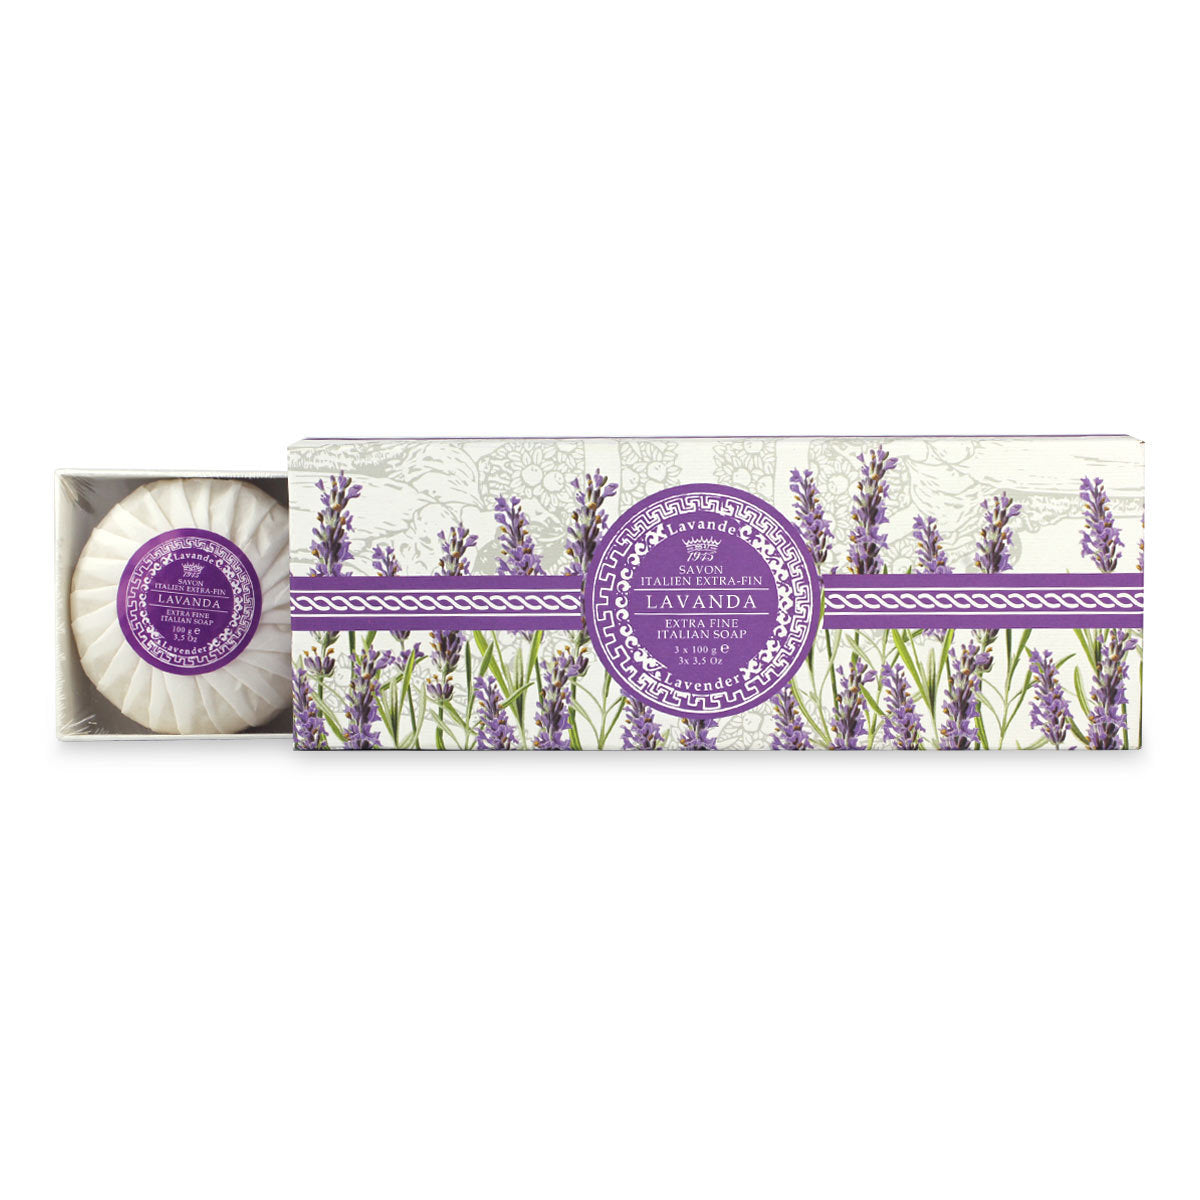 Primary image of Lavender - 3 Soap Set